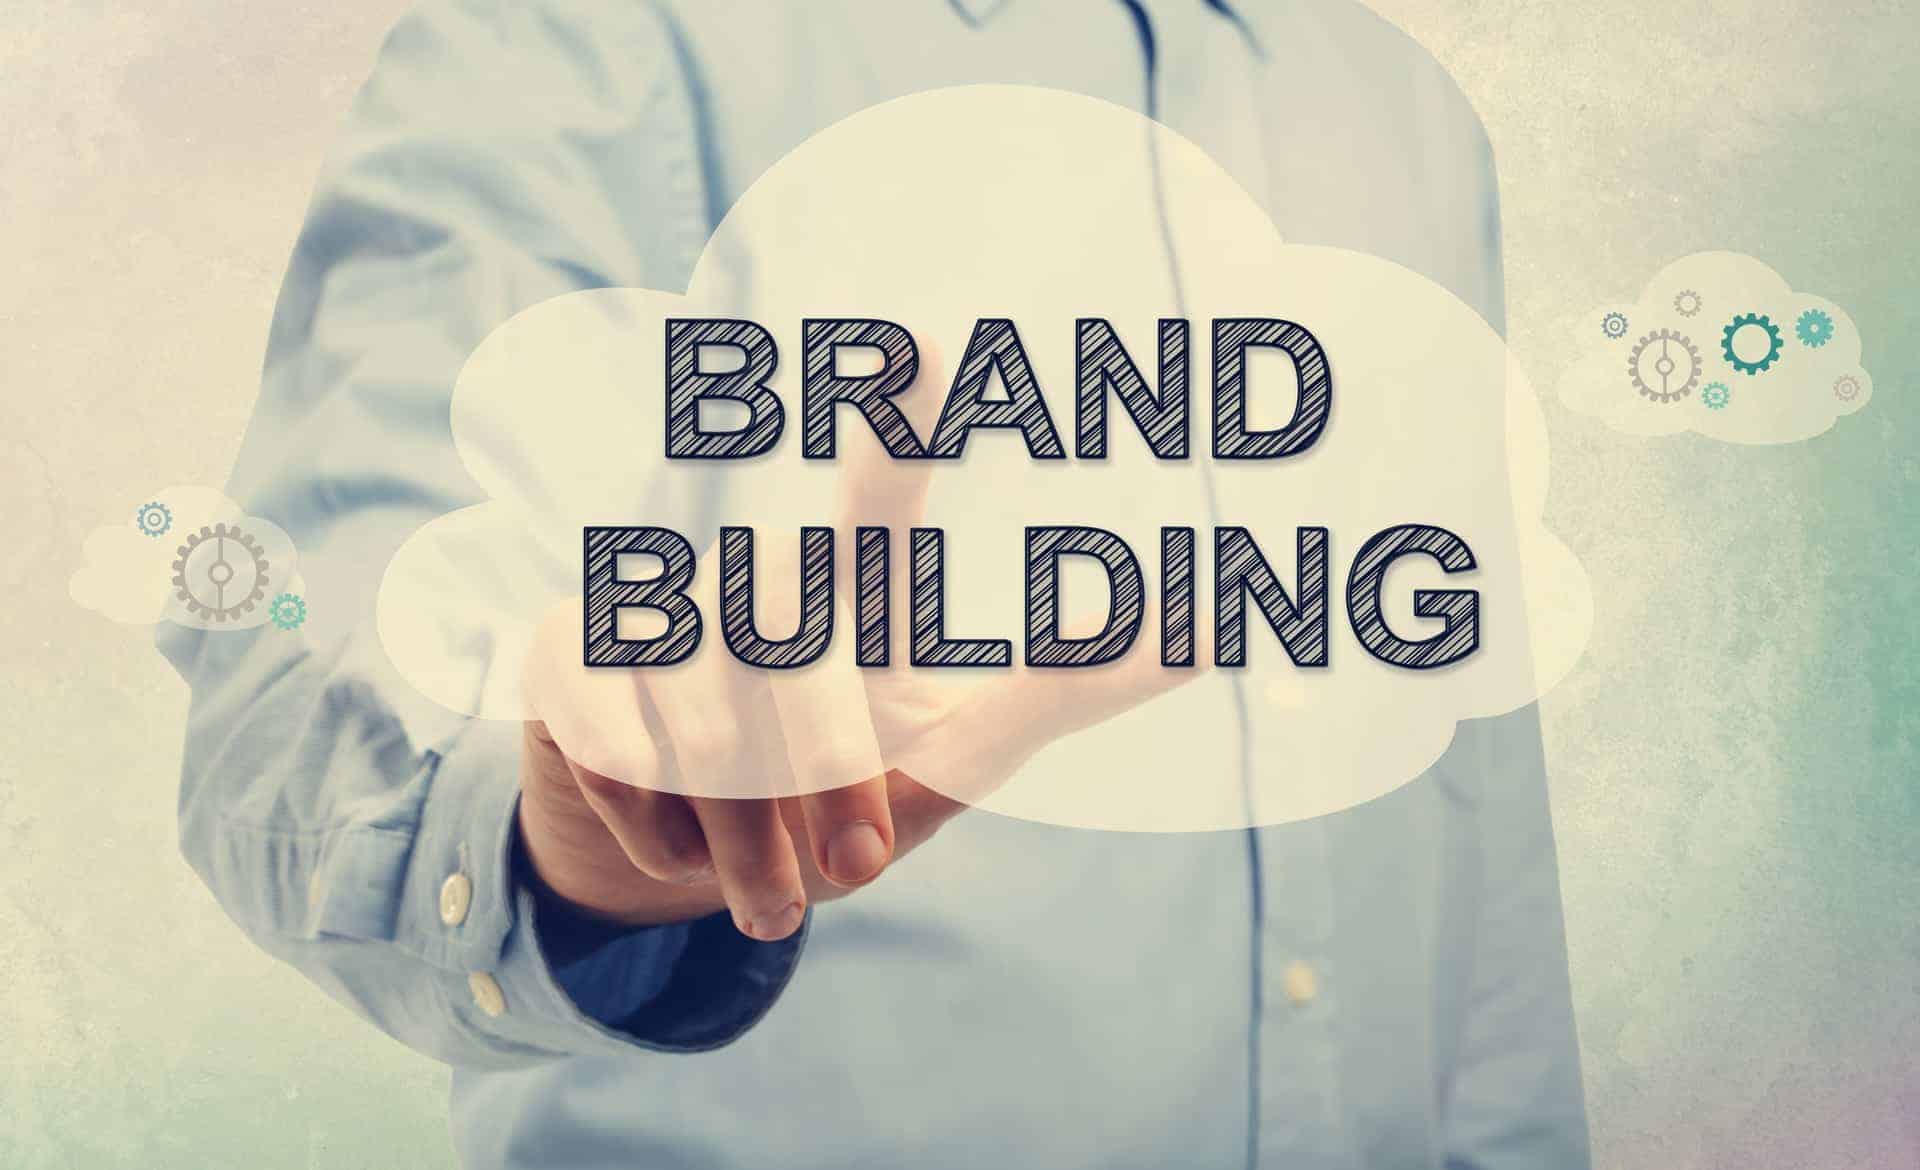 5 Examples of Brand Building via Company Culture